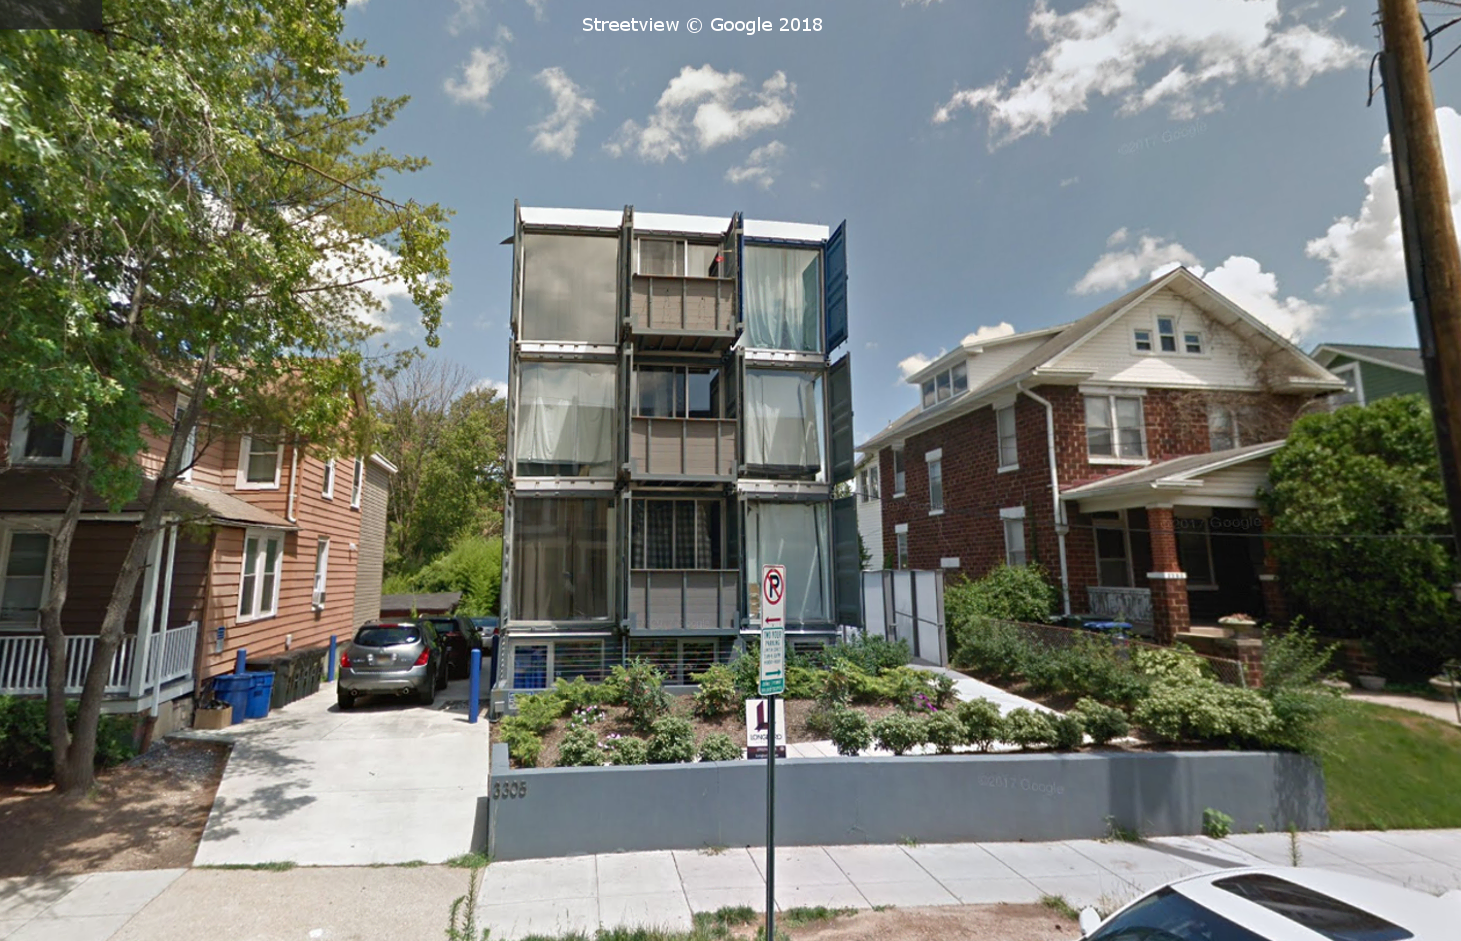 Sea Container Housing in DC, Washington, Google Streetview